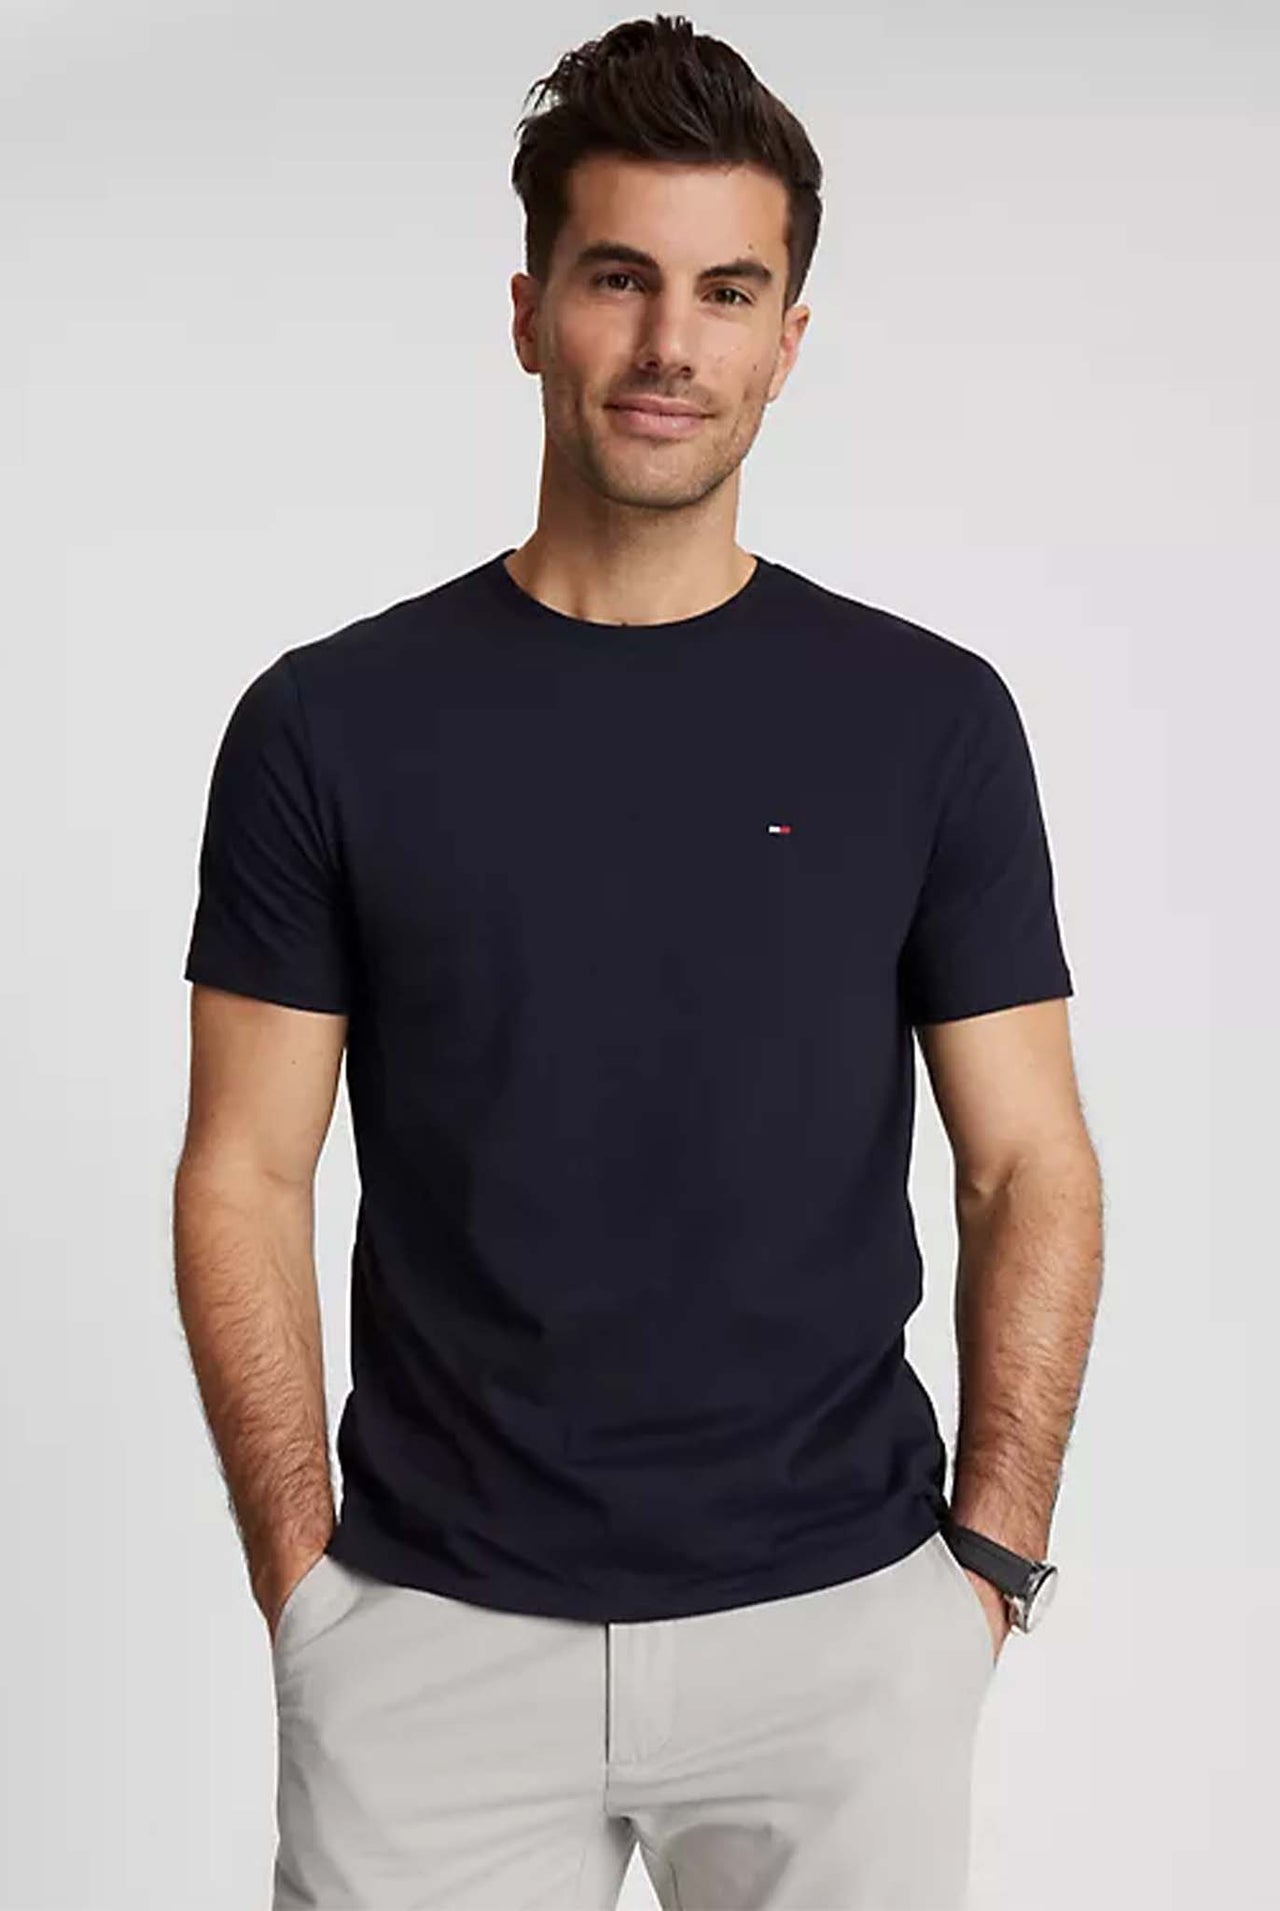 Camiseta Tommy Hilfiger Essential Solid Navy